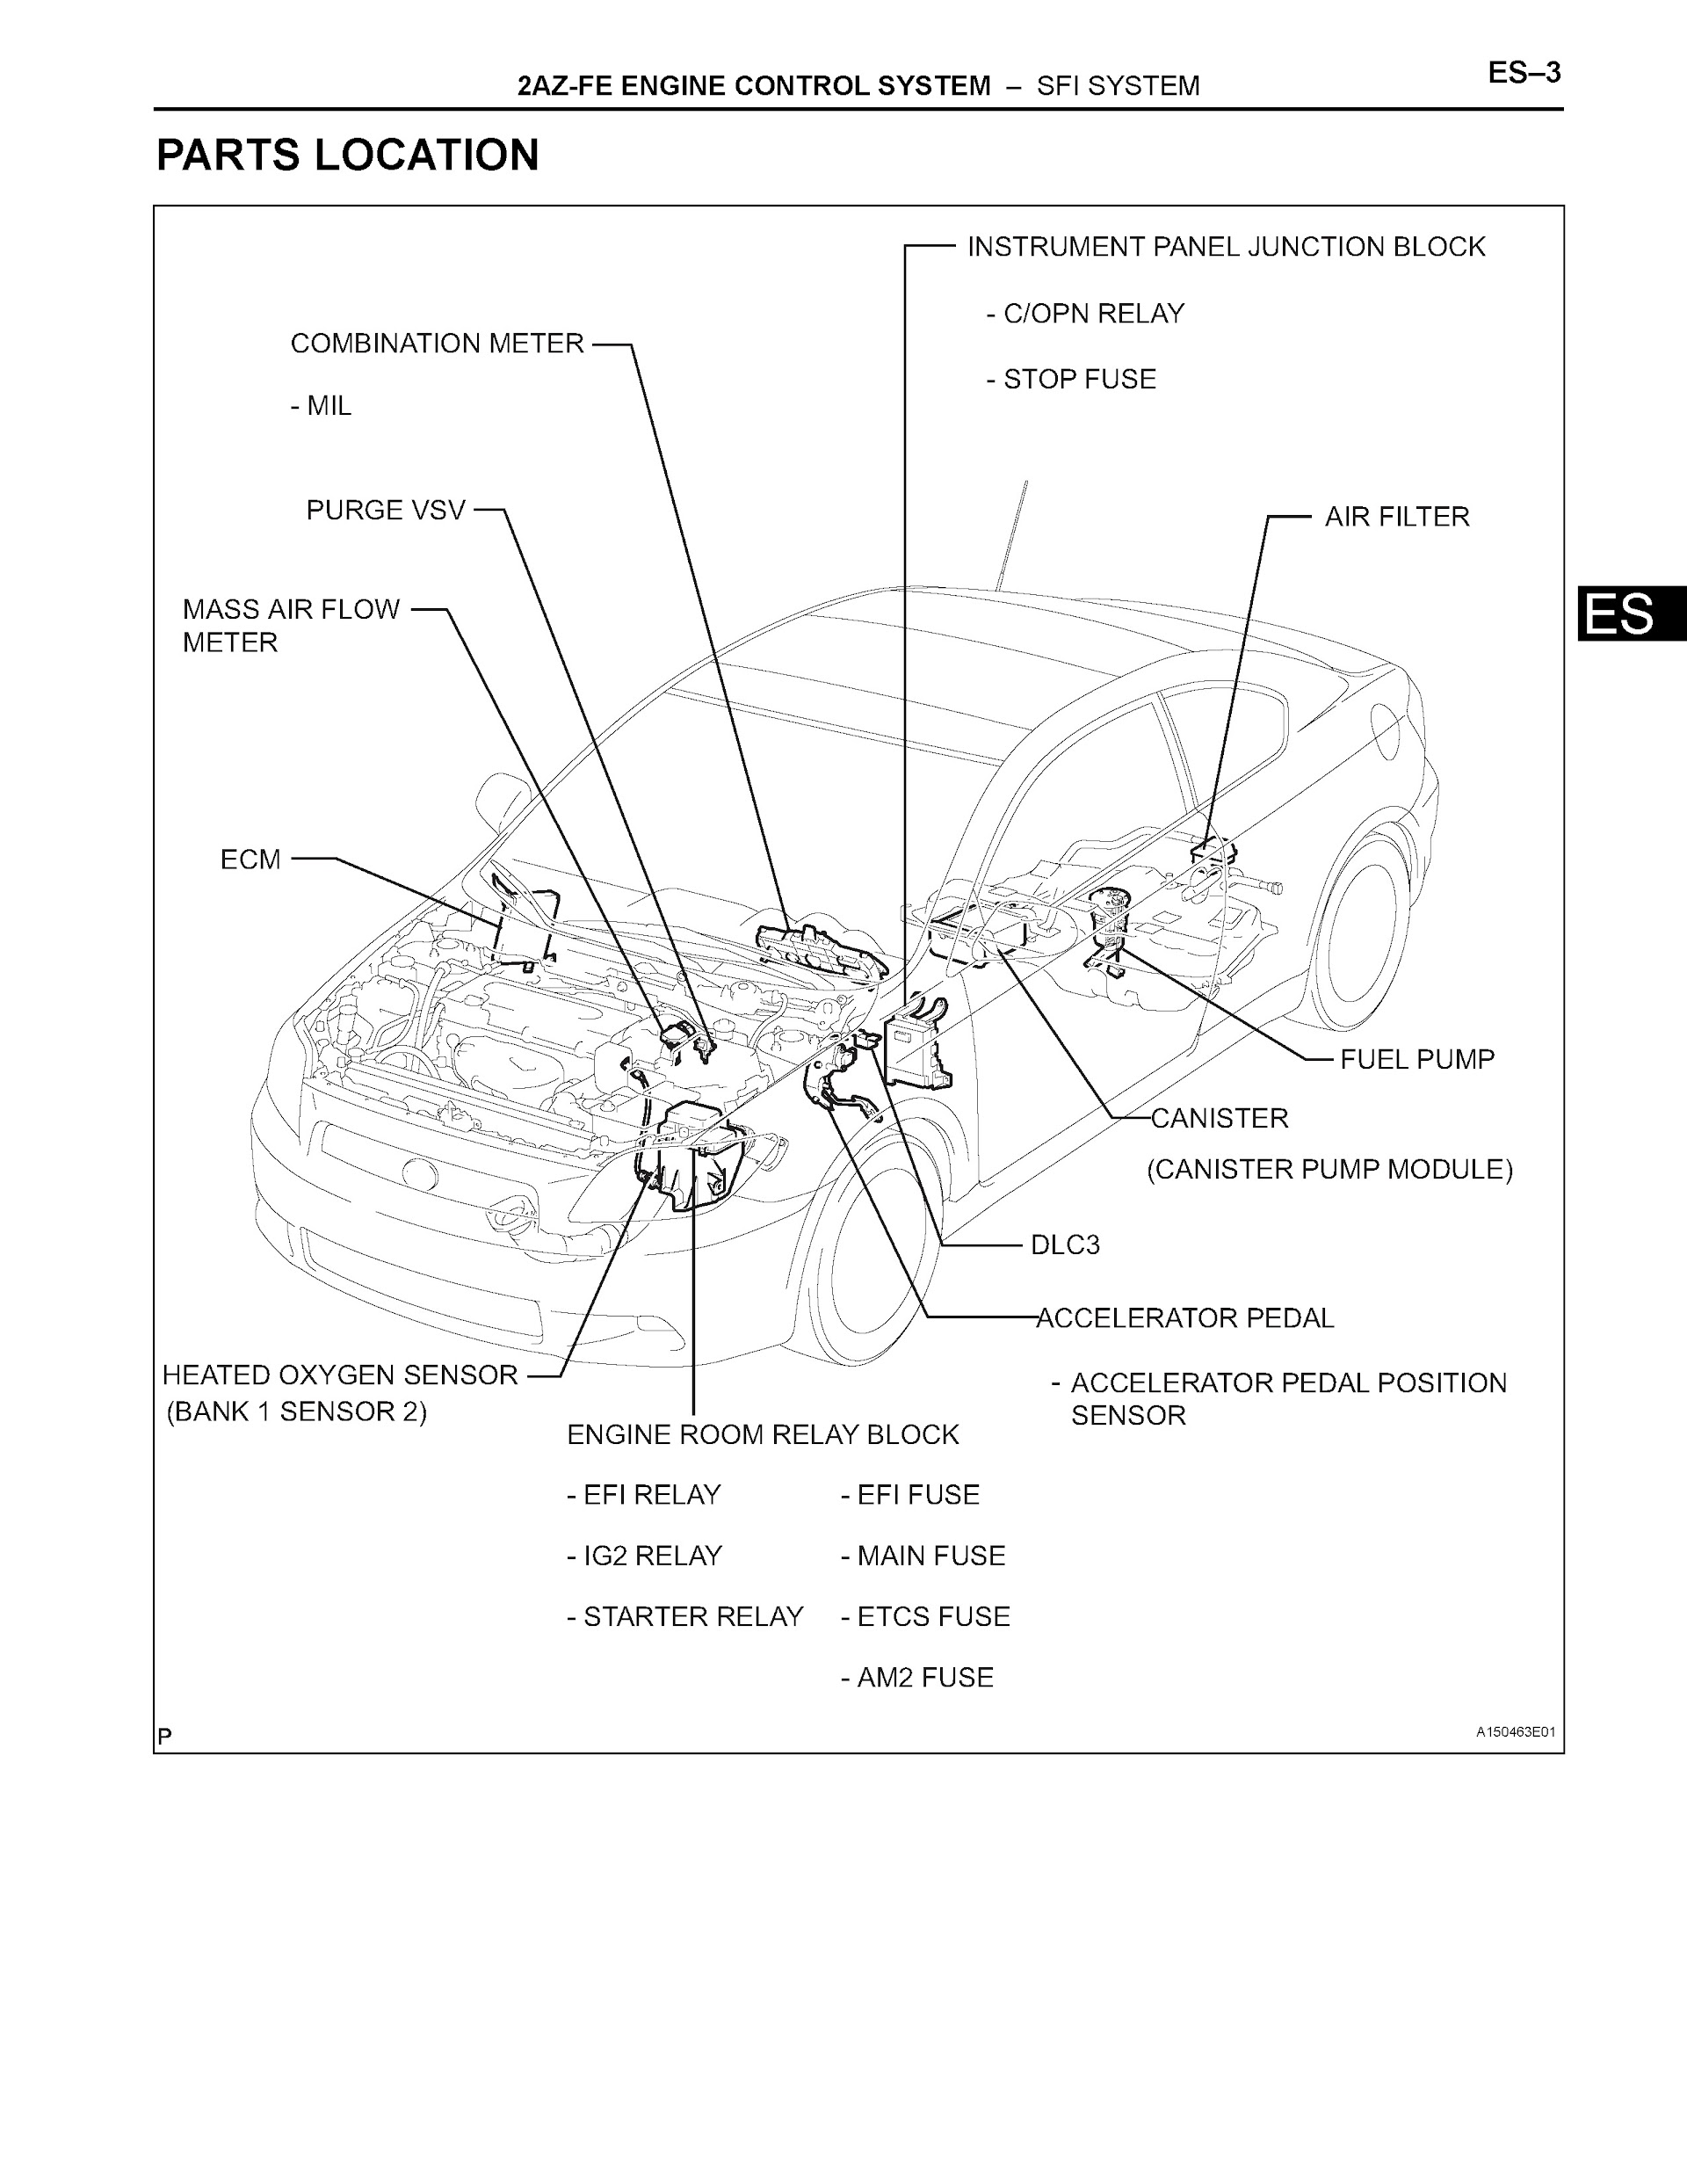 2005 scion tc repair manual pdf 2AZ-FE Engine Control System